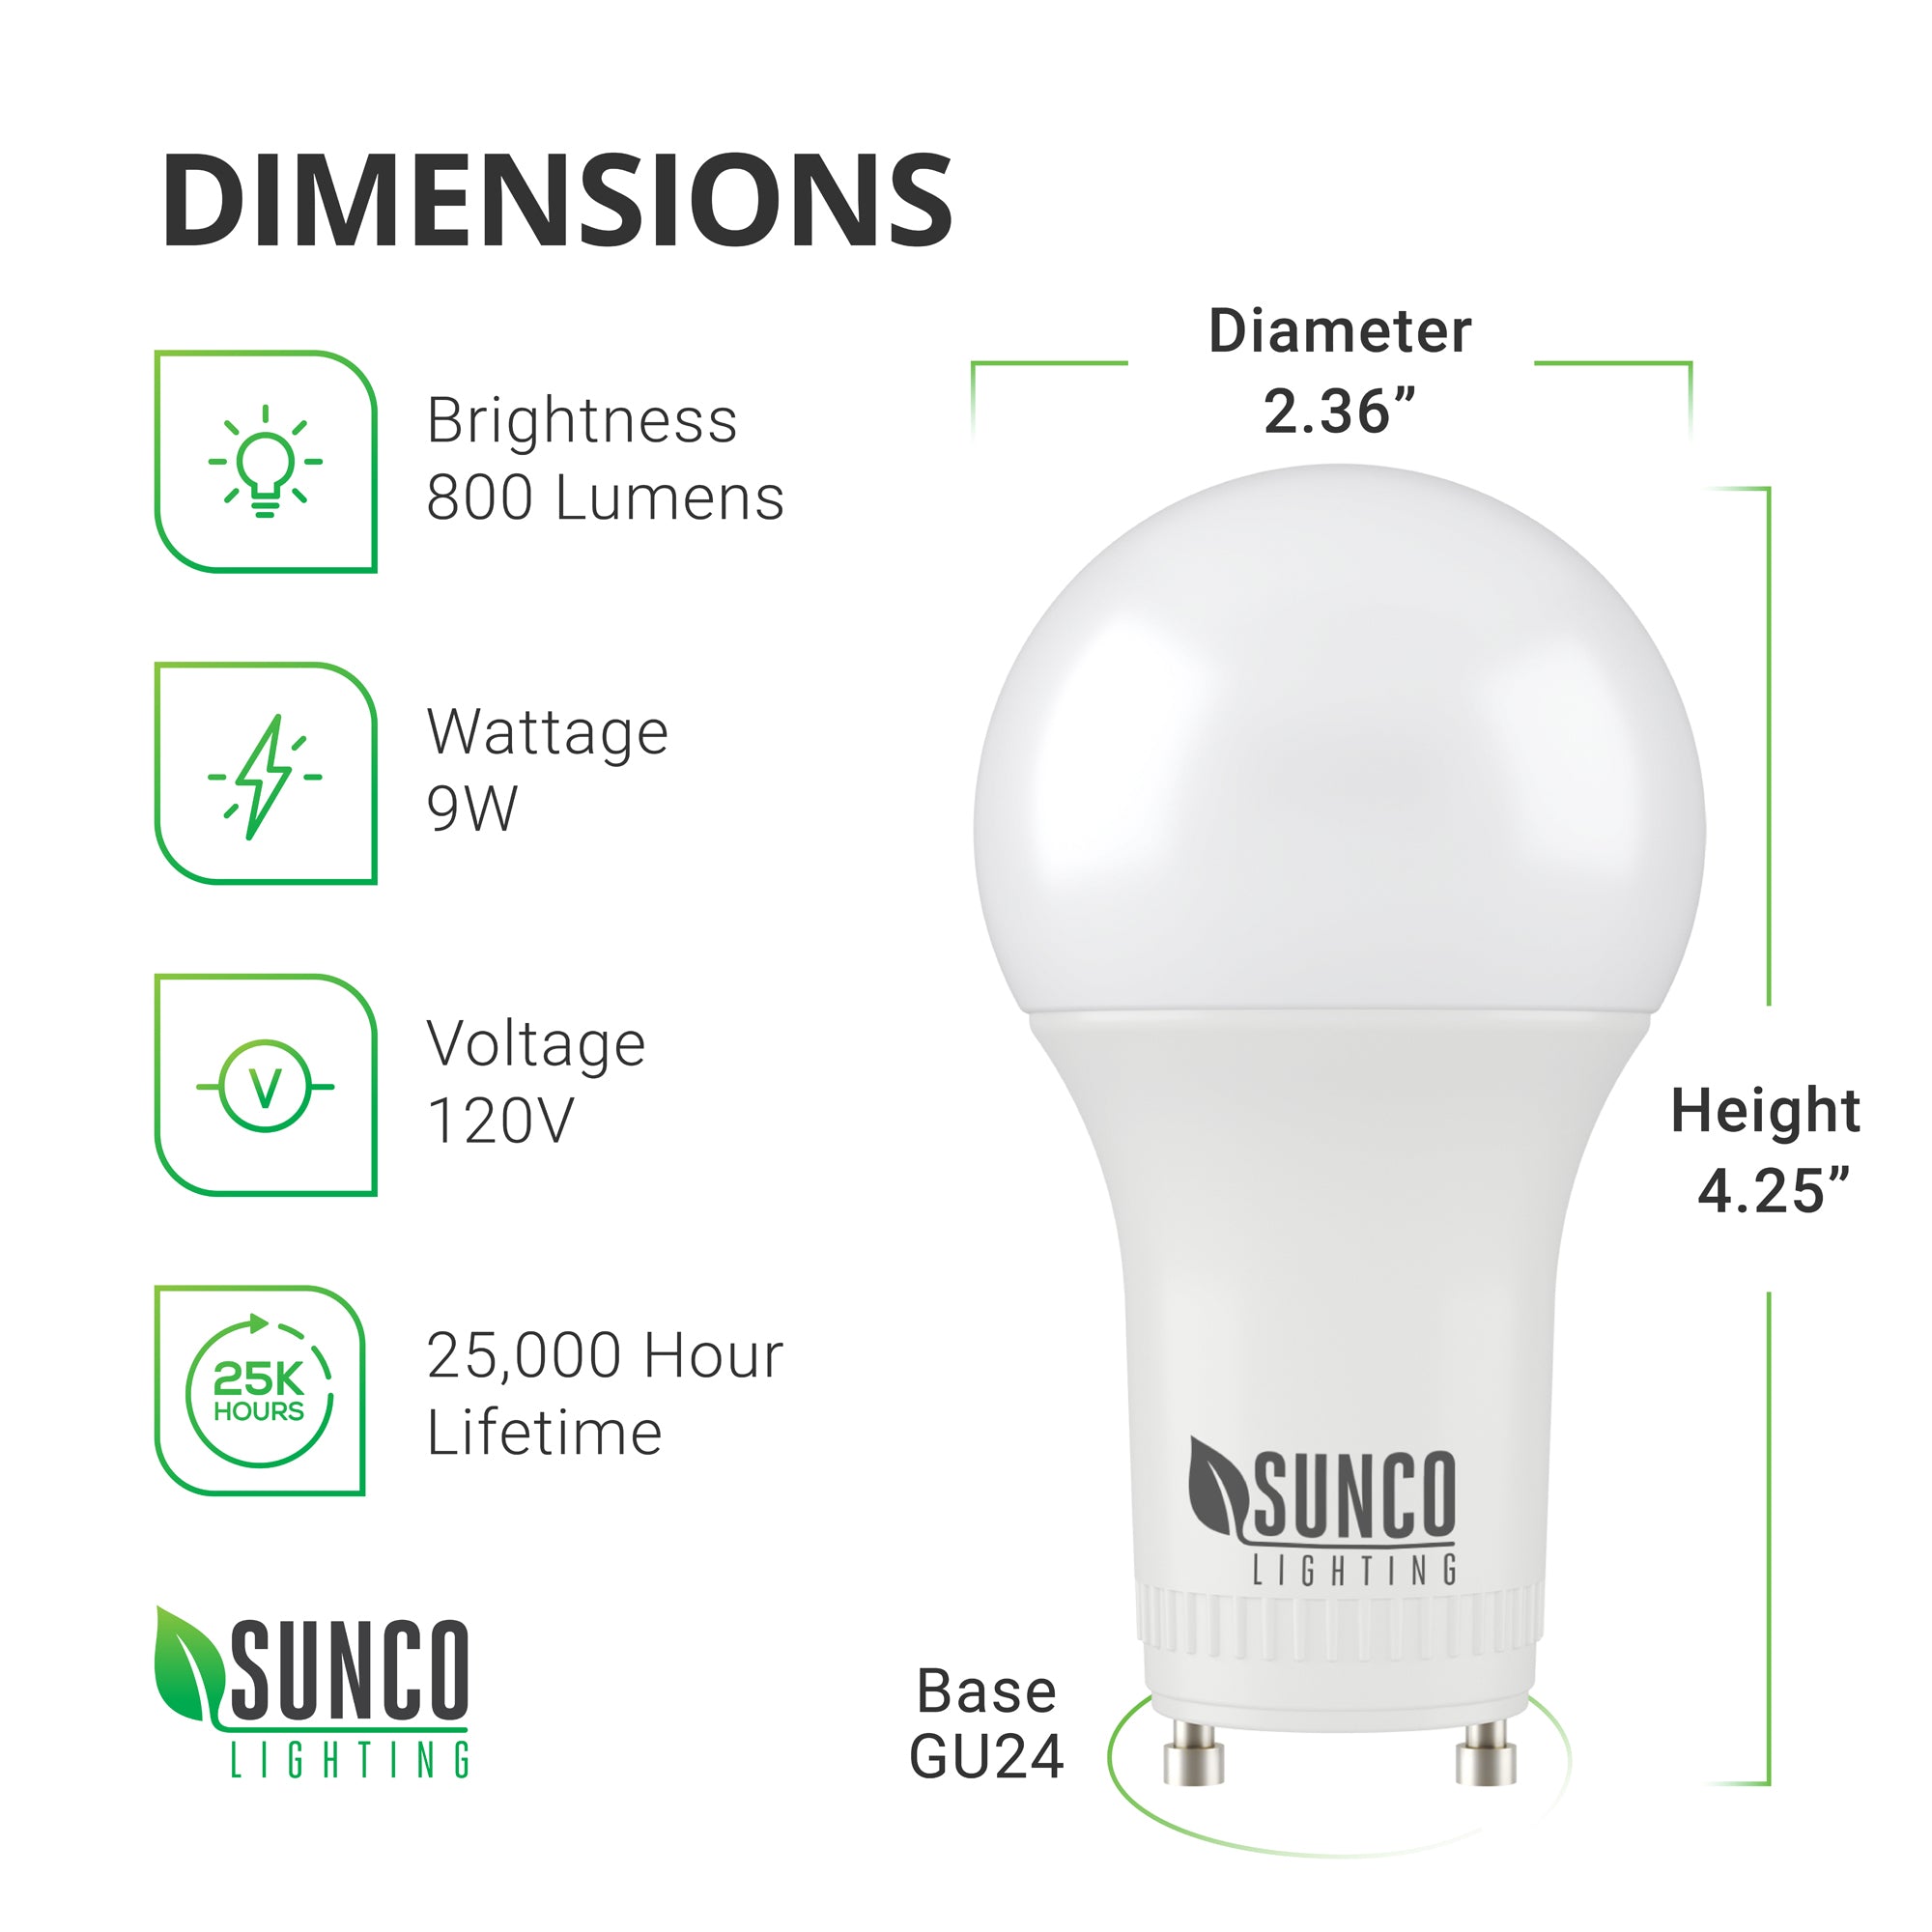 NOMA A19 E26 Base Household Non-Dimmable LED Light Bulbs, 5000K, 800 Lumens,  Daylight, 60W, 6-pk